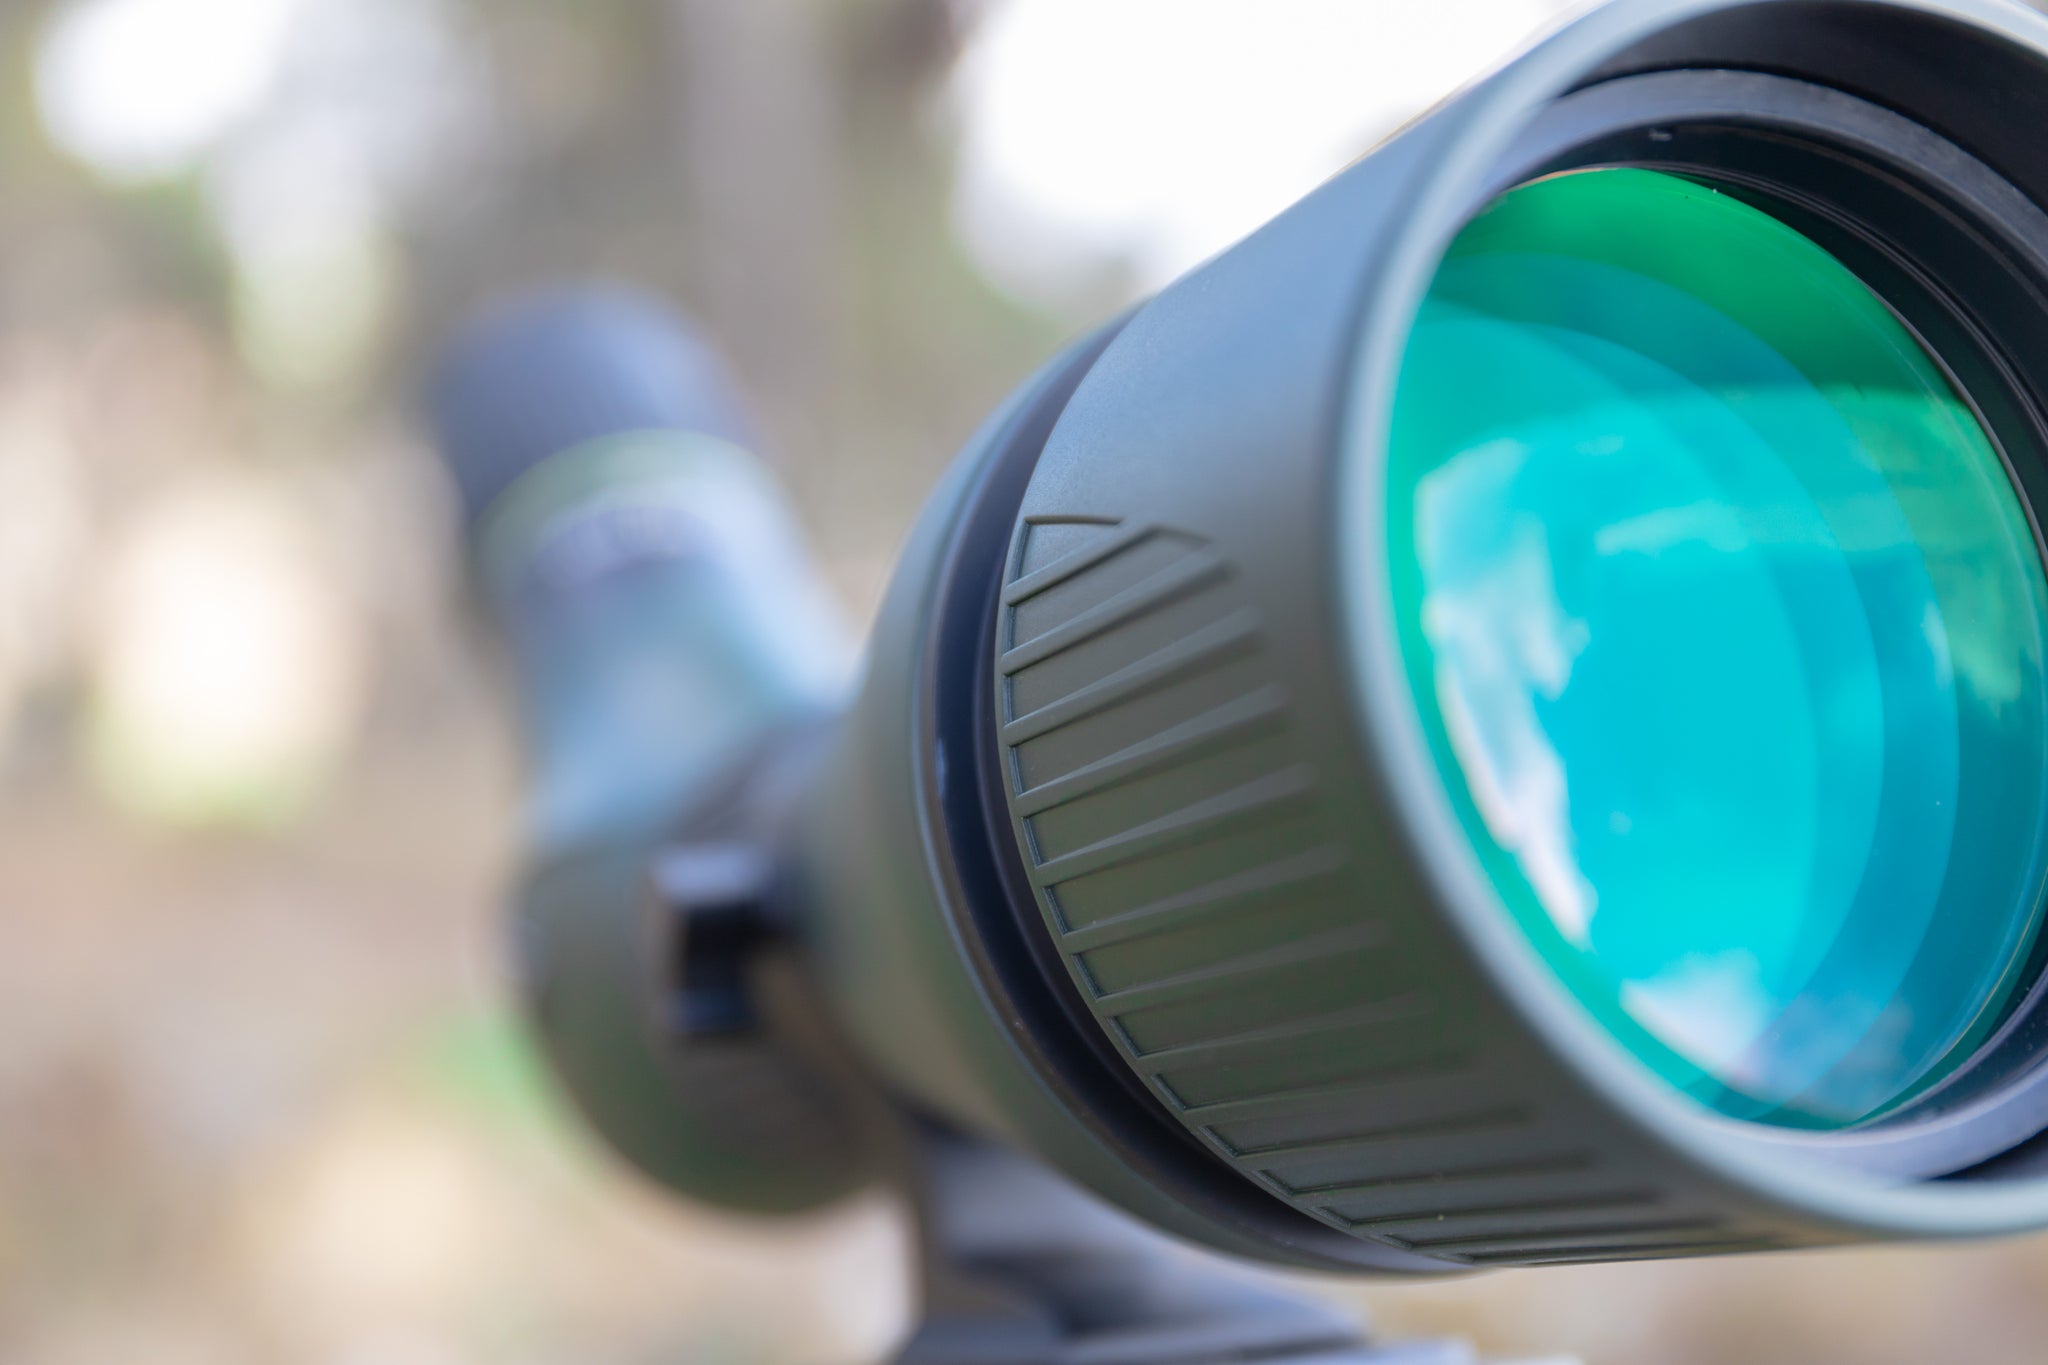 best spotting scope for birding hunting outdoors travel hiking vanguard veo spotting scope tripod digiscope adapter